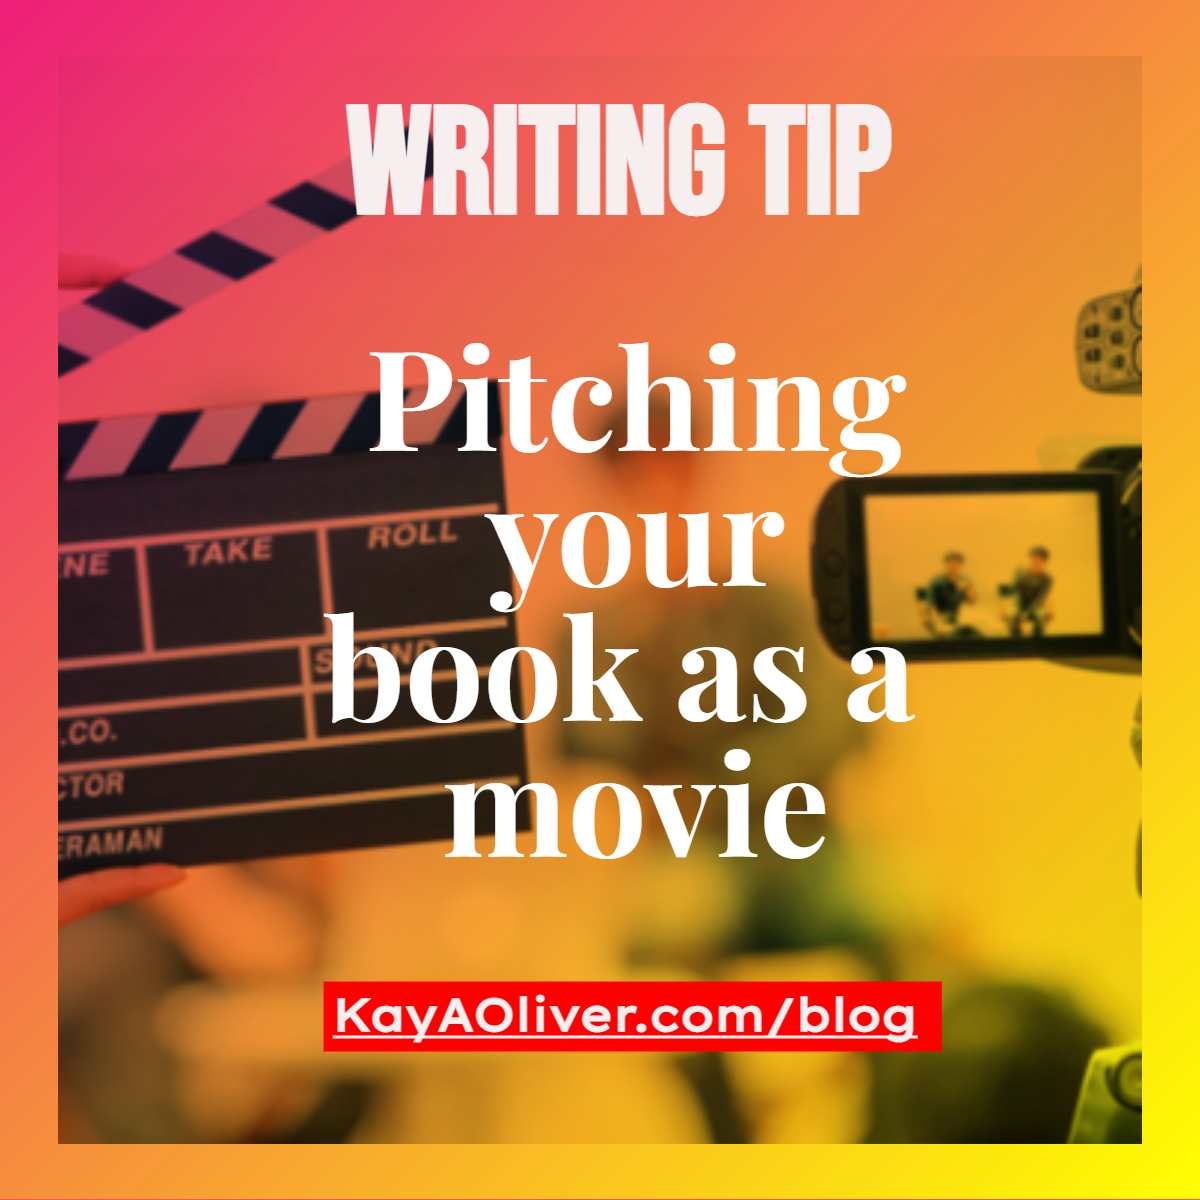 @Nemoralis86 Kayaoliver.com/blog

#pitch your #books for the #bigscreen. #writingtips from a #hollywoodinsider. #bookstofilm #readingcommunity #writingcommunity #writingblog